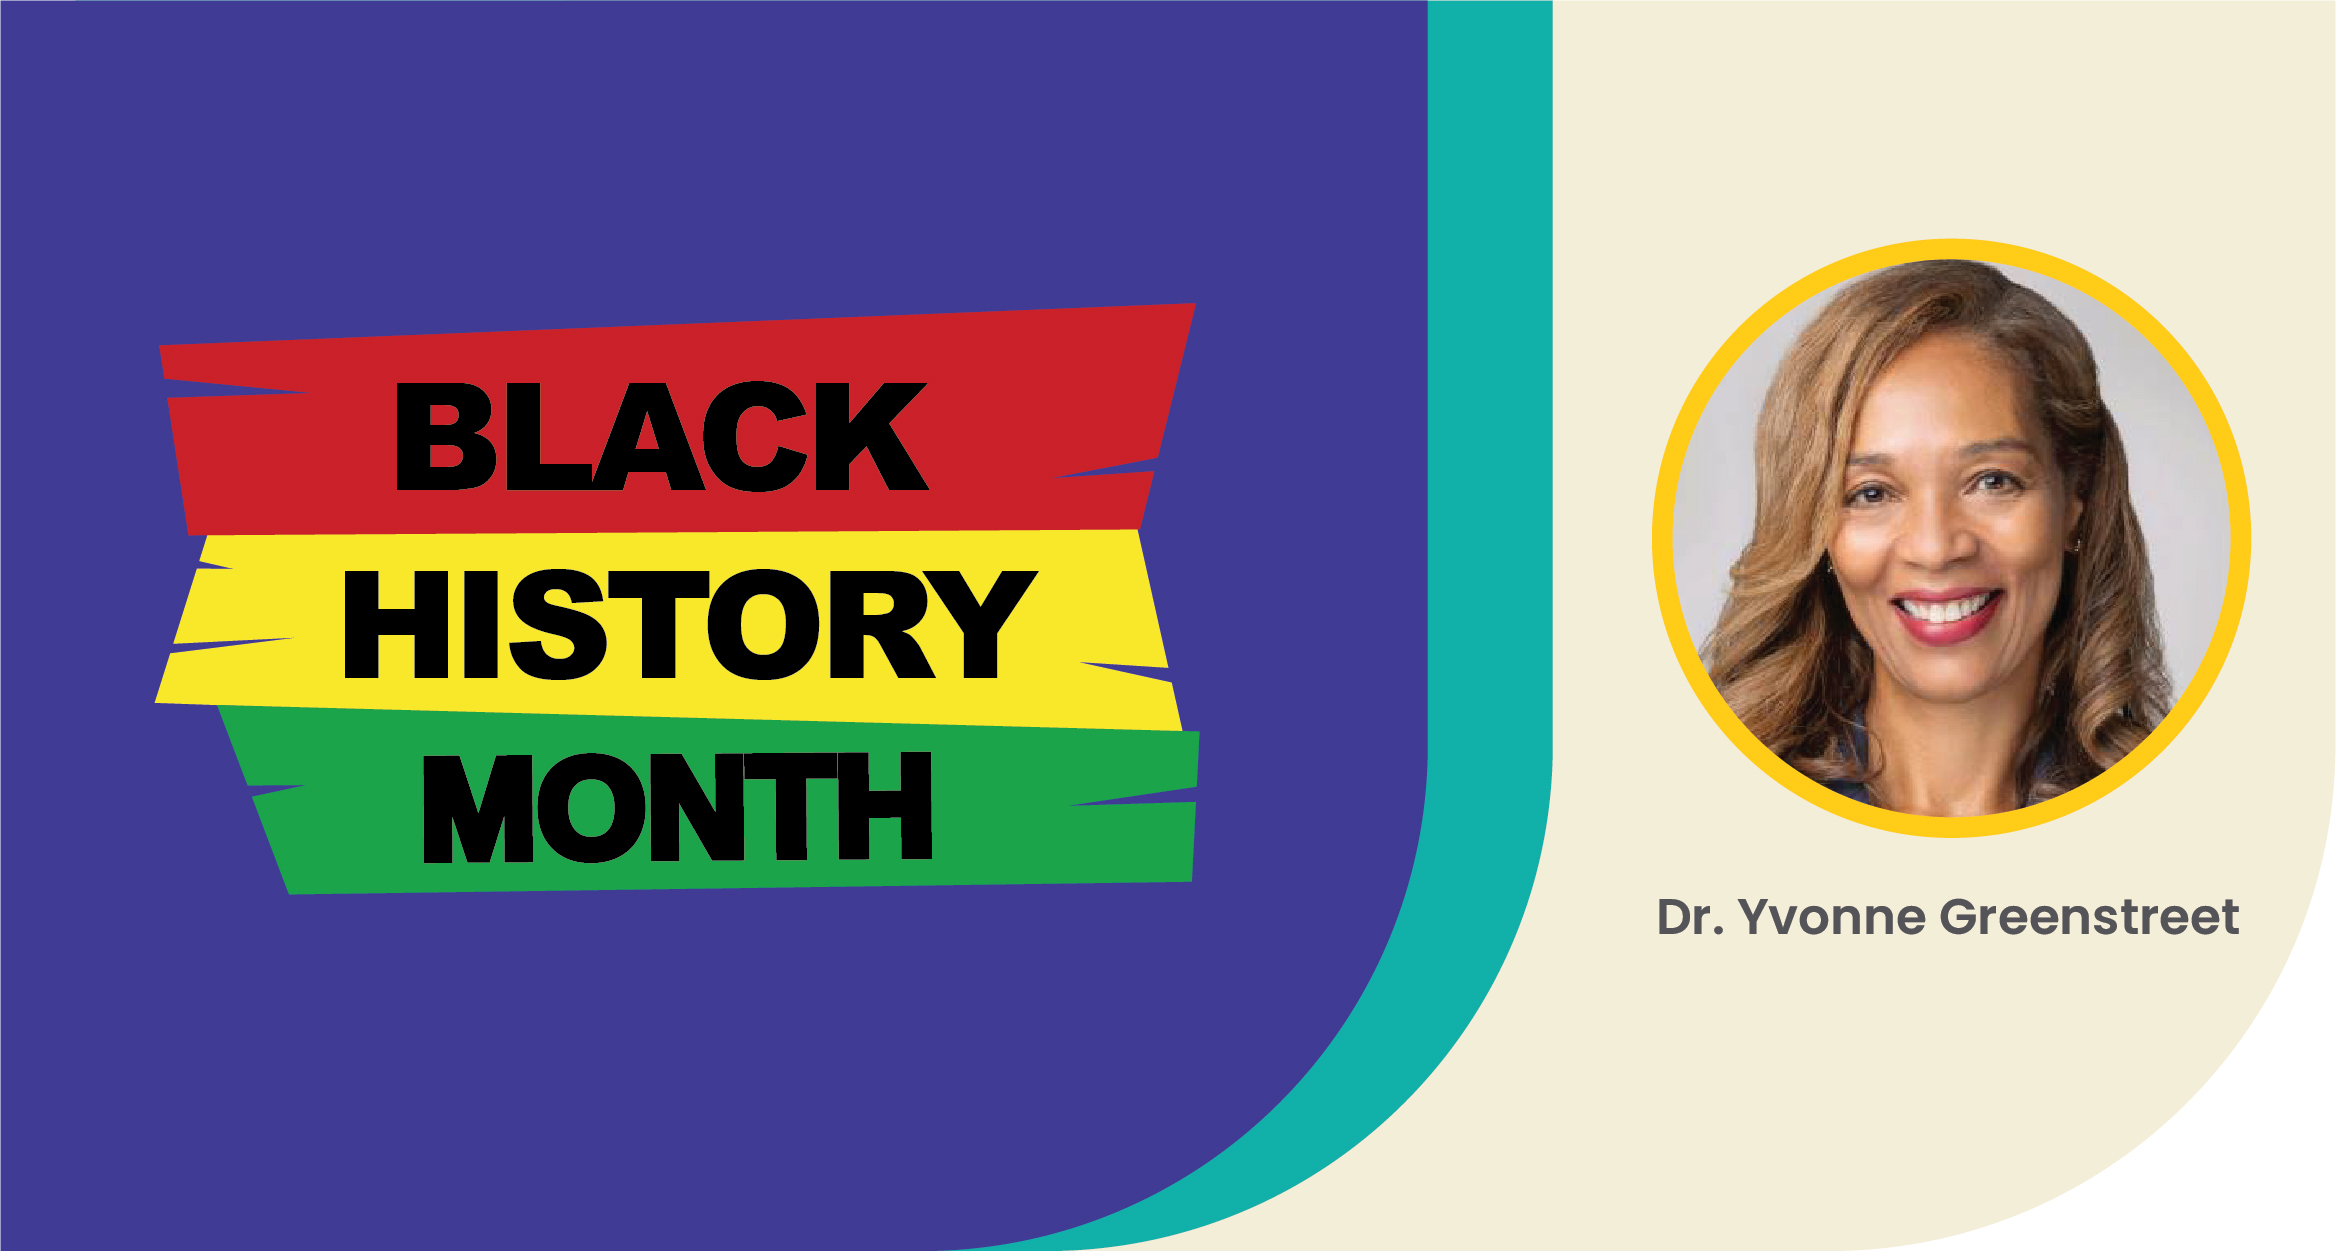 Black History Month: Dr. Yvonne Greenstreet